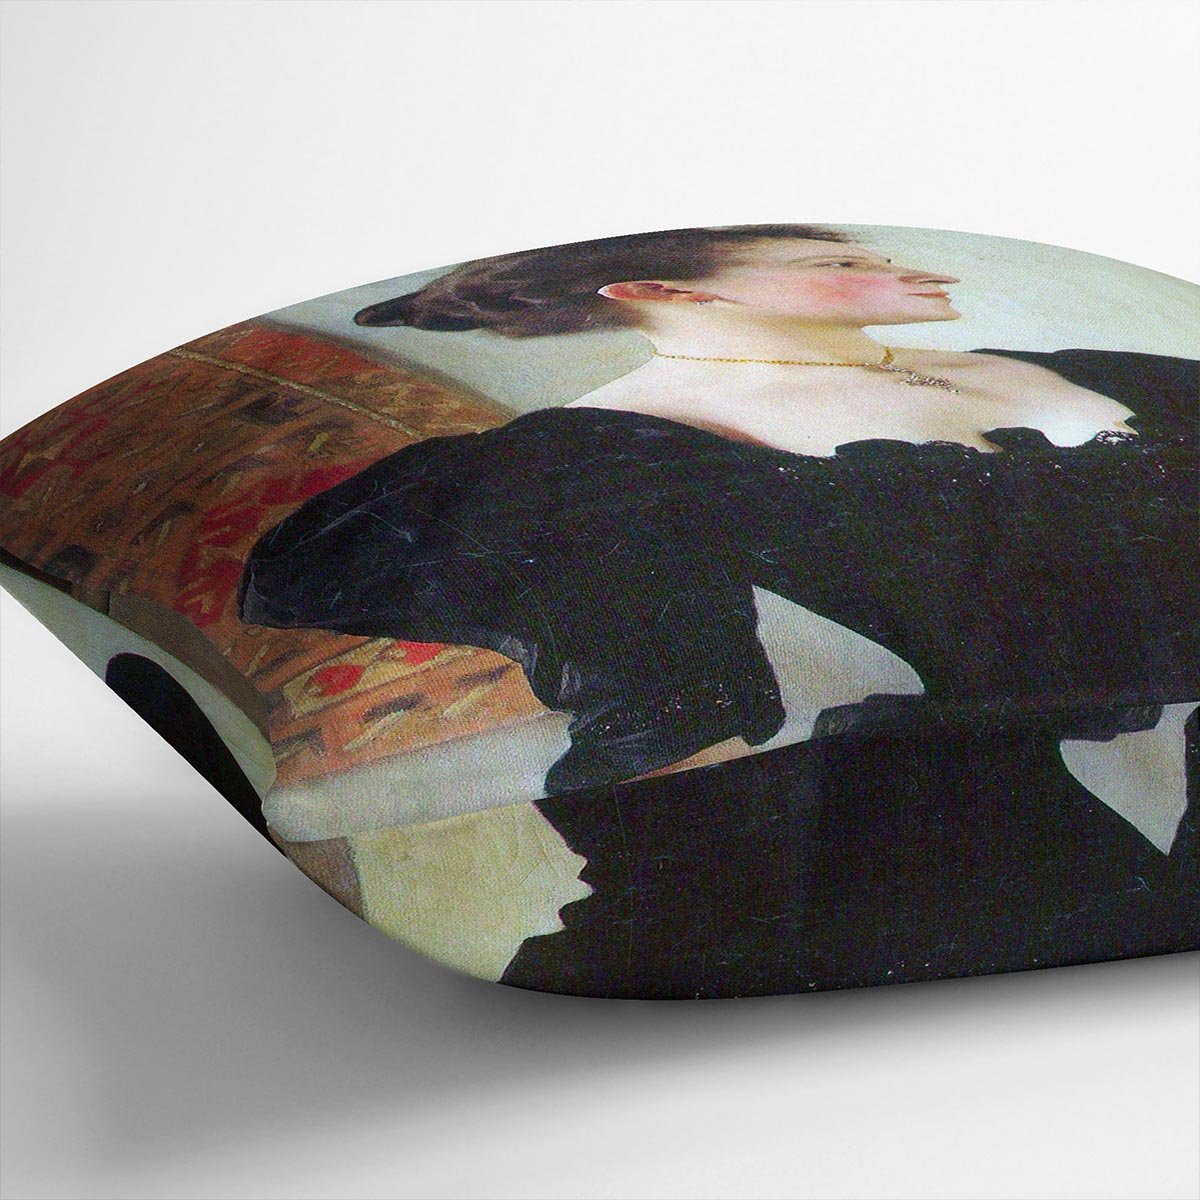 Portrait of Marie Breunig by Klimt Throw Pillow